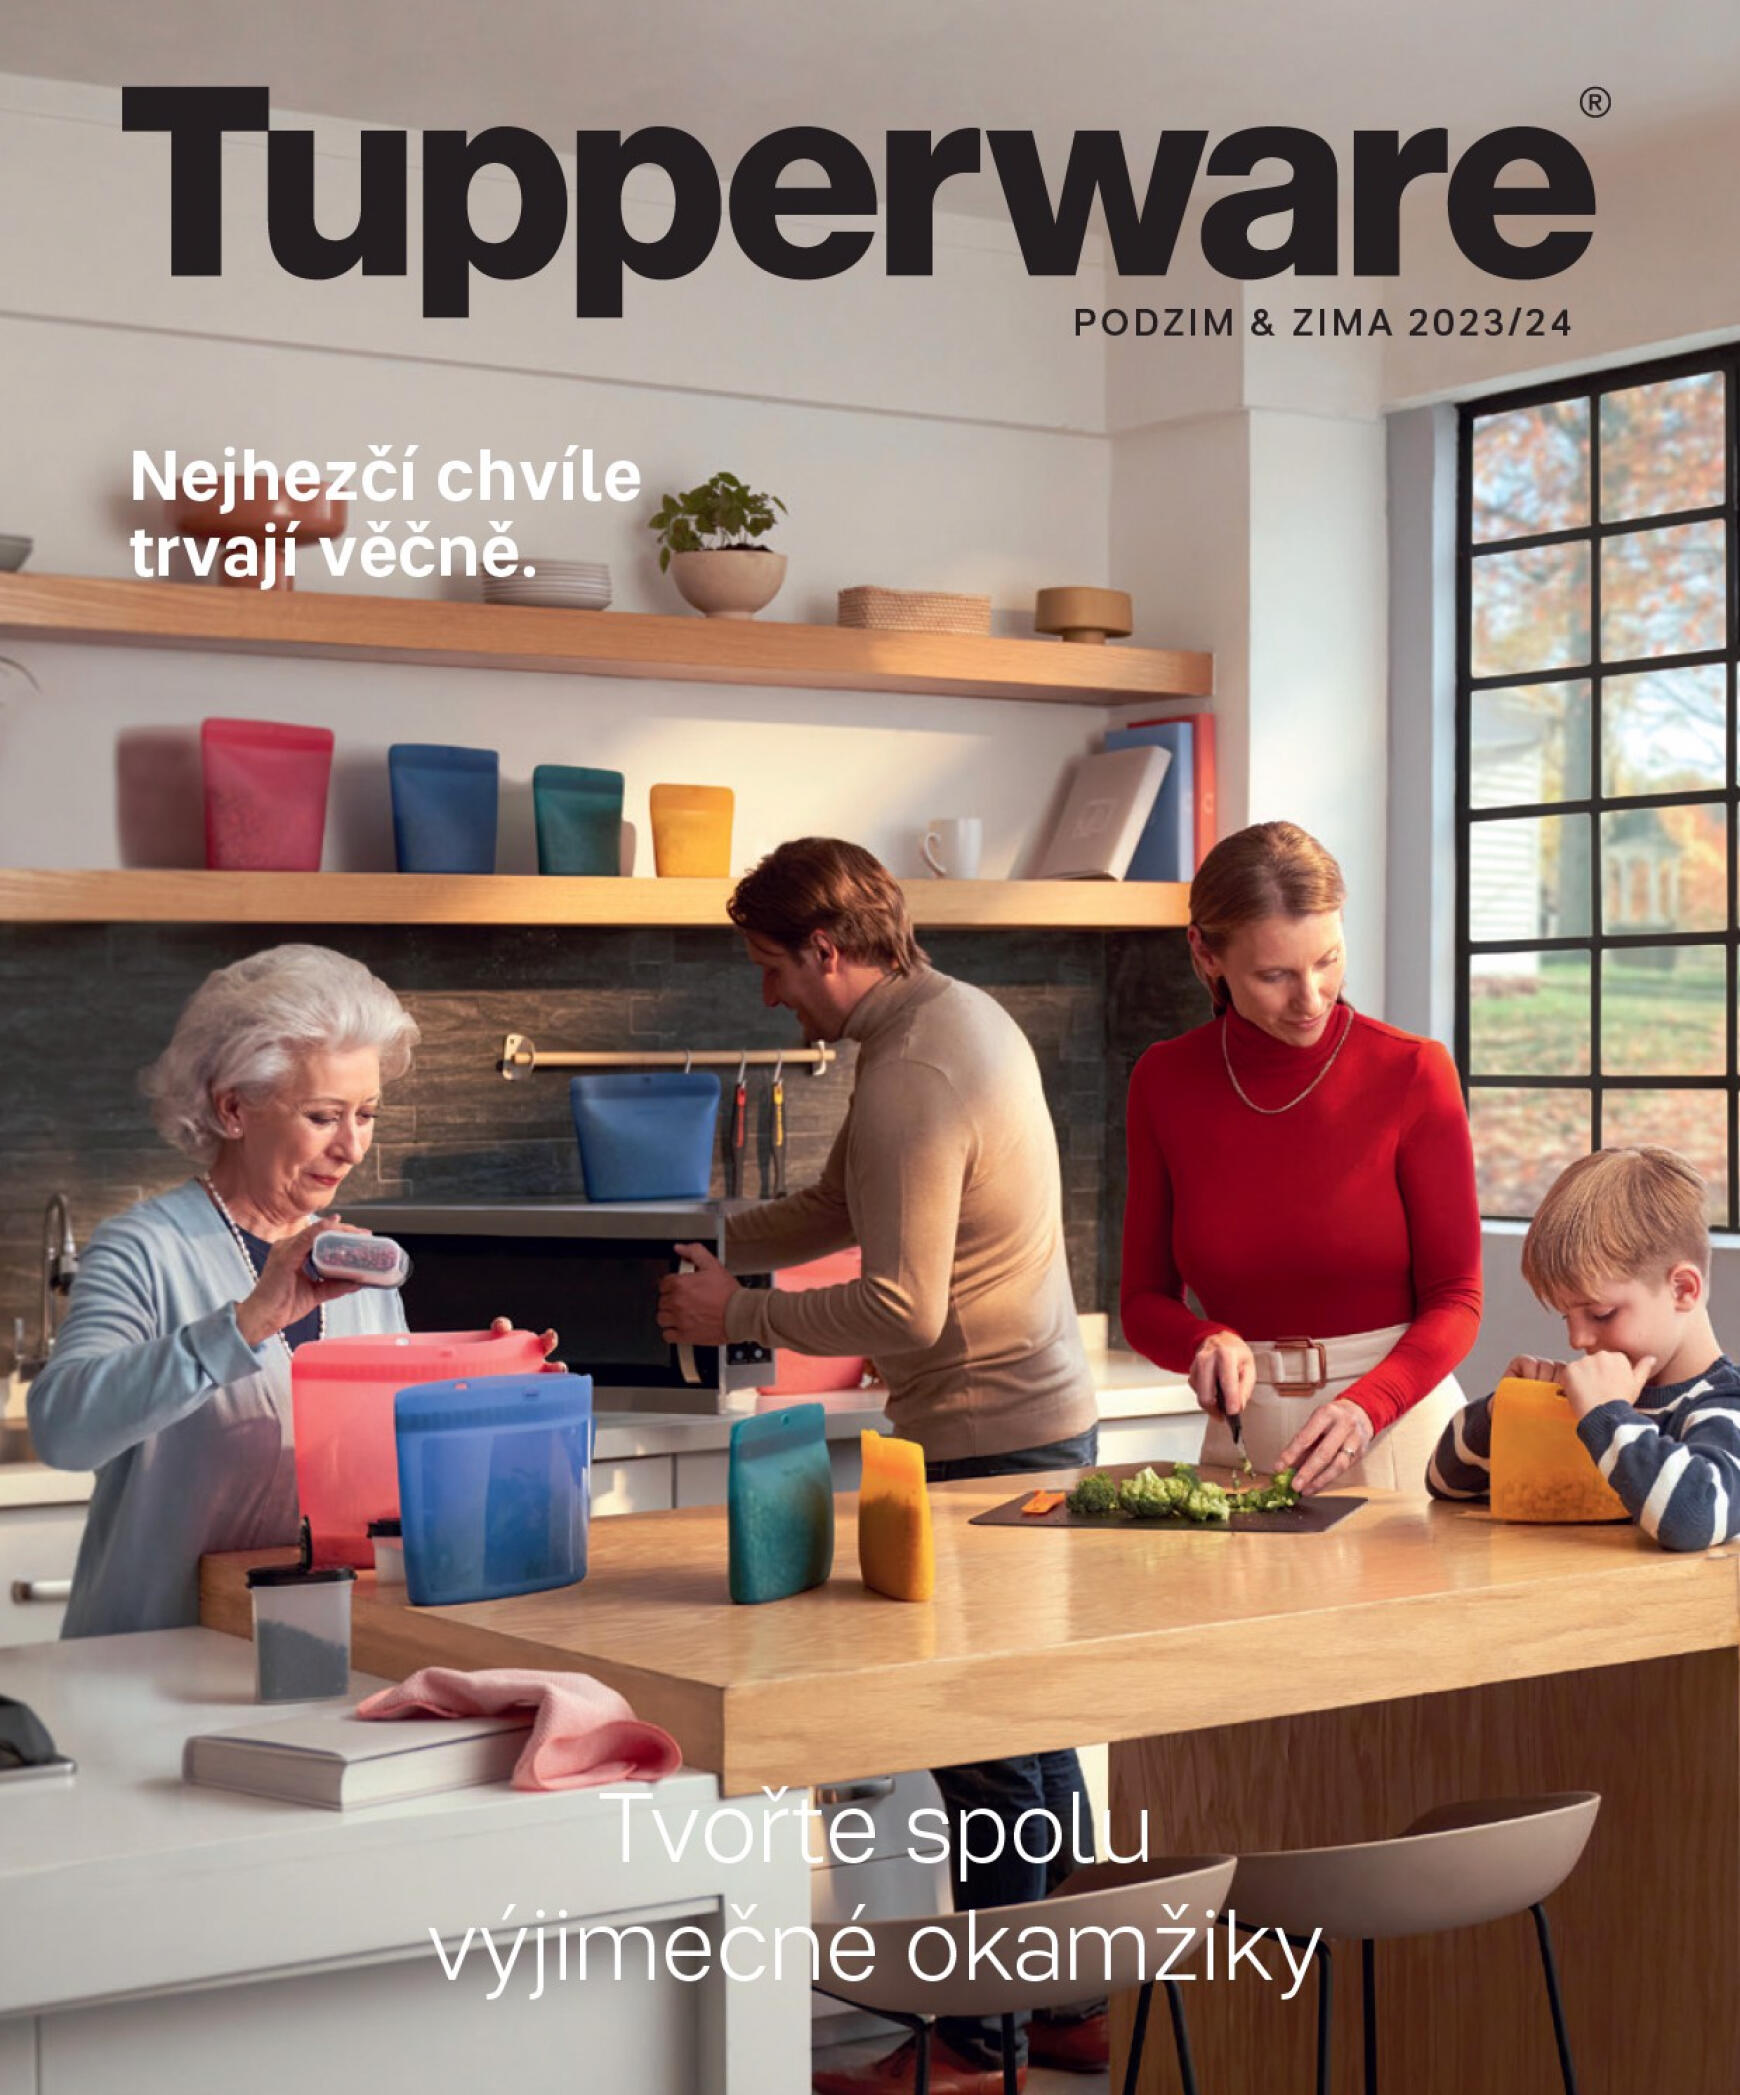 tupperware - Tupperware - PODZIM & ZIMA 2023/24 platný od 01.09.2023